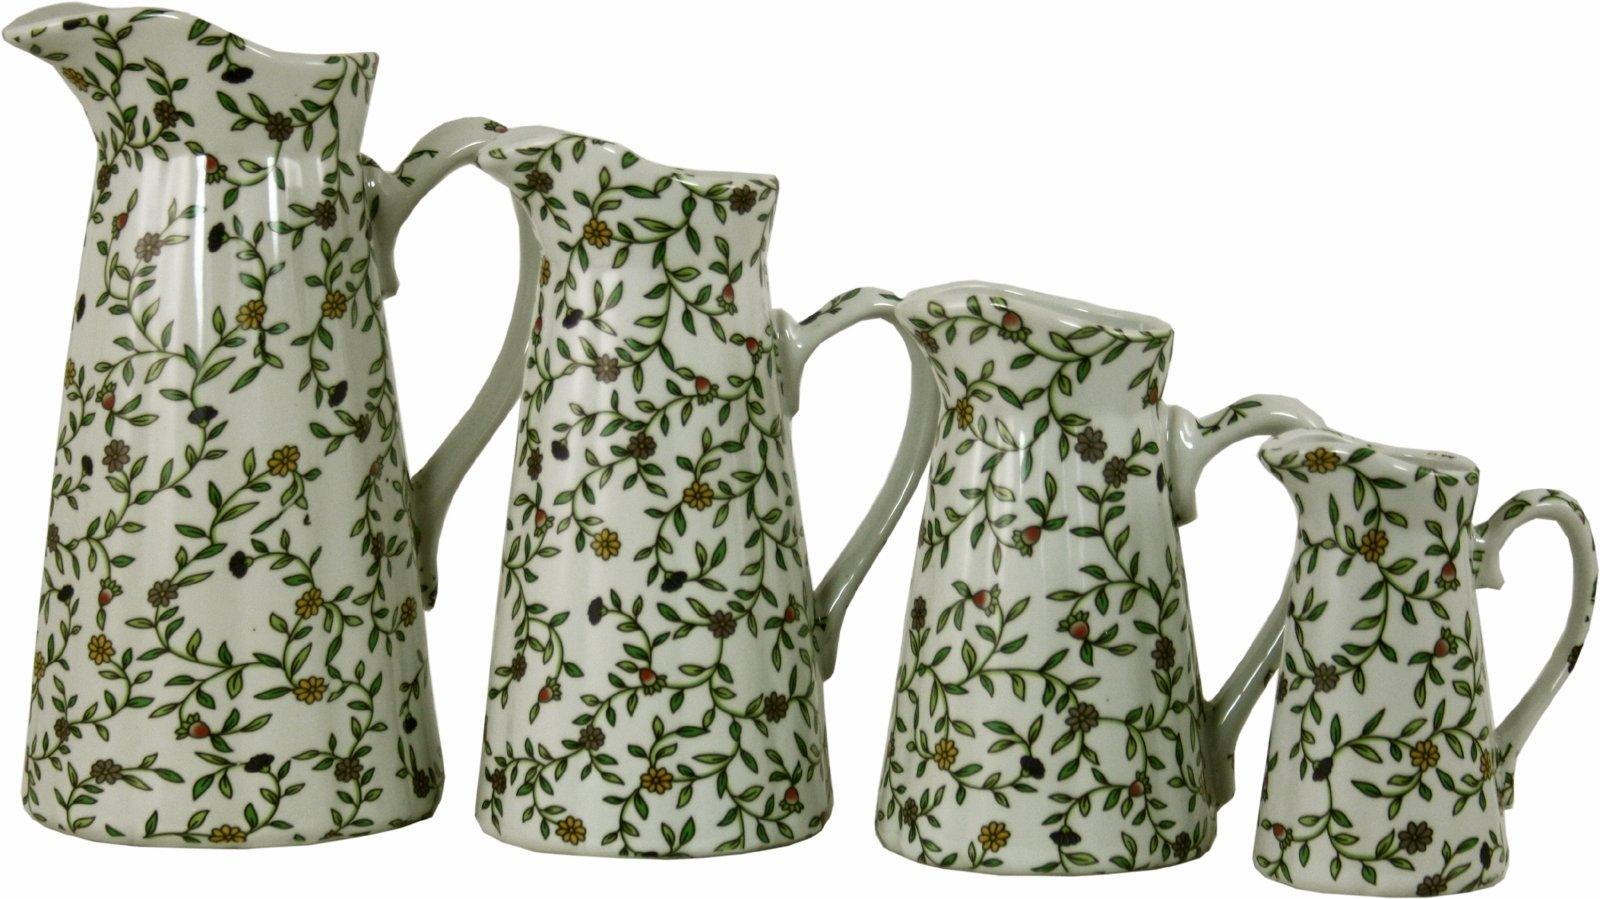 View Set of 4 Ceramic Jugs Vintage Green White Floral Design information